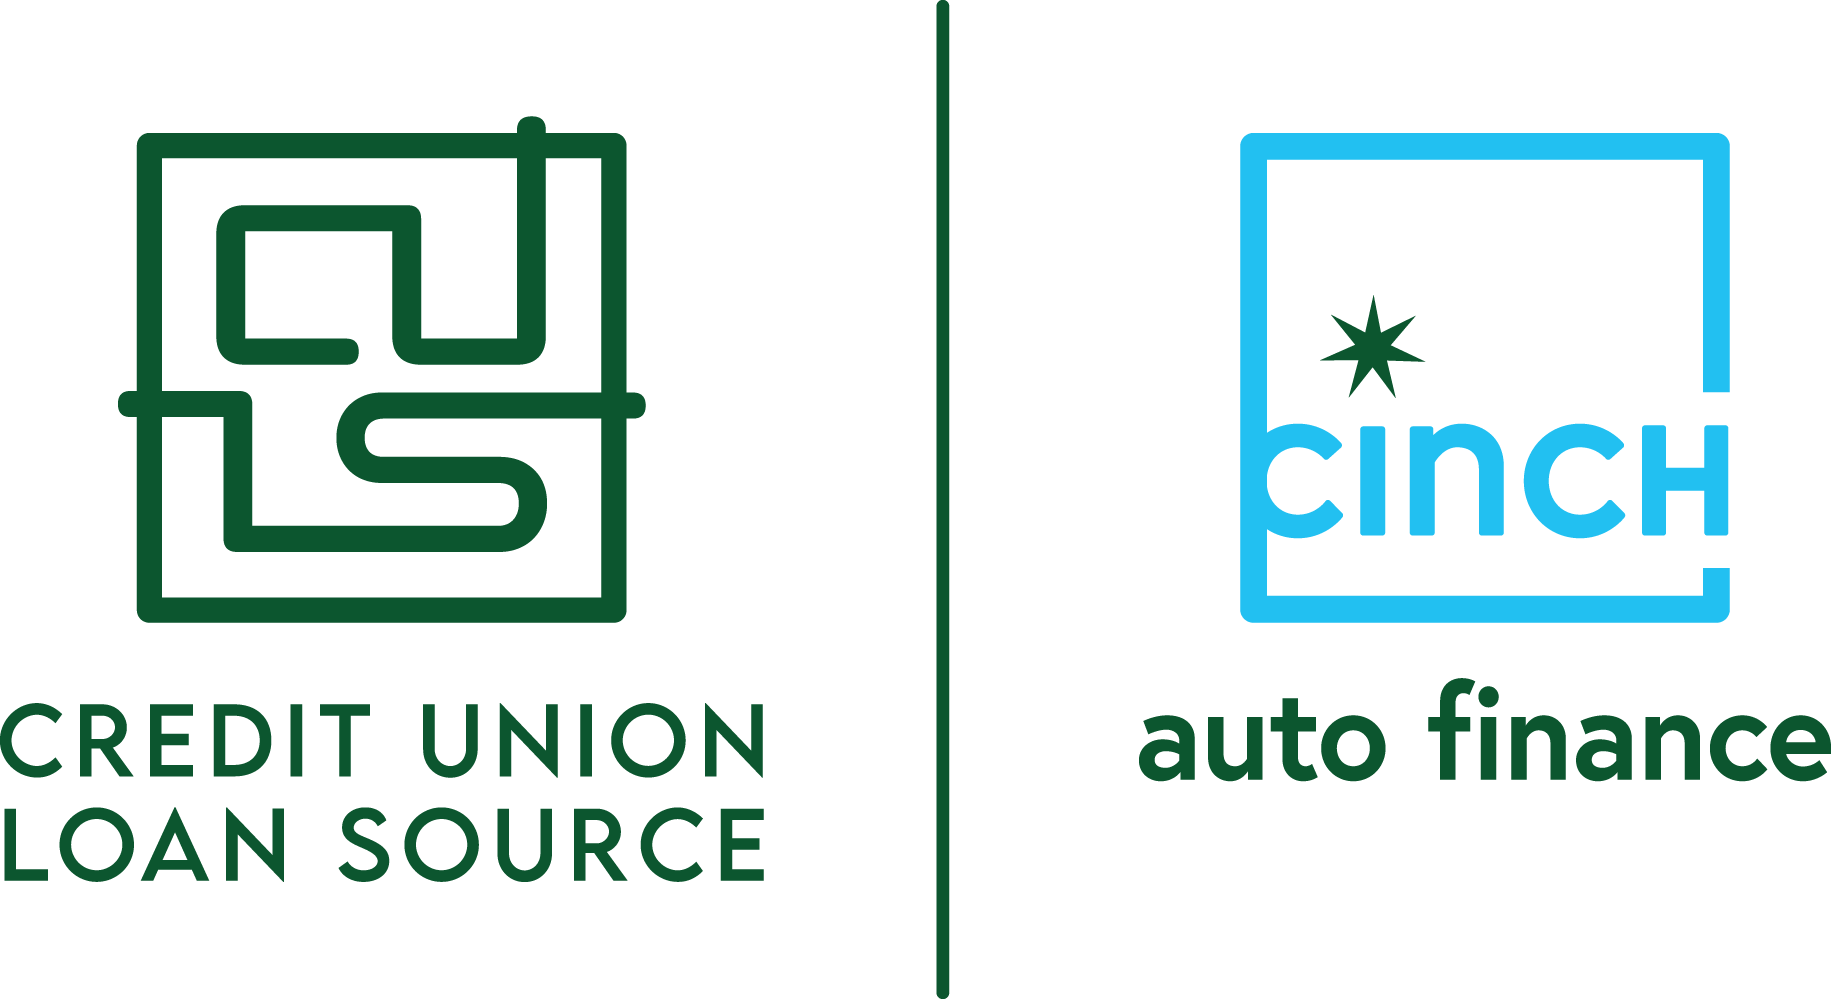 Credit Union Loan Source Company Logo